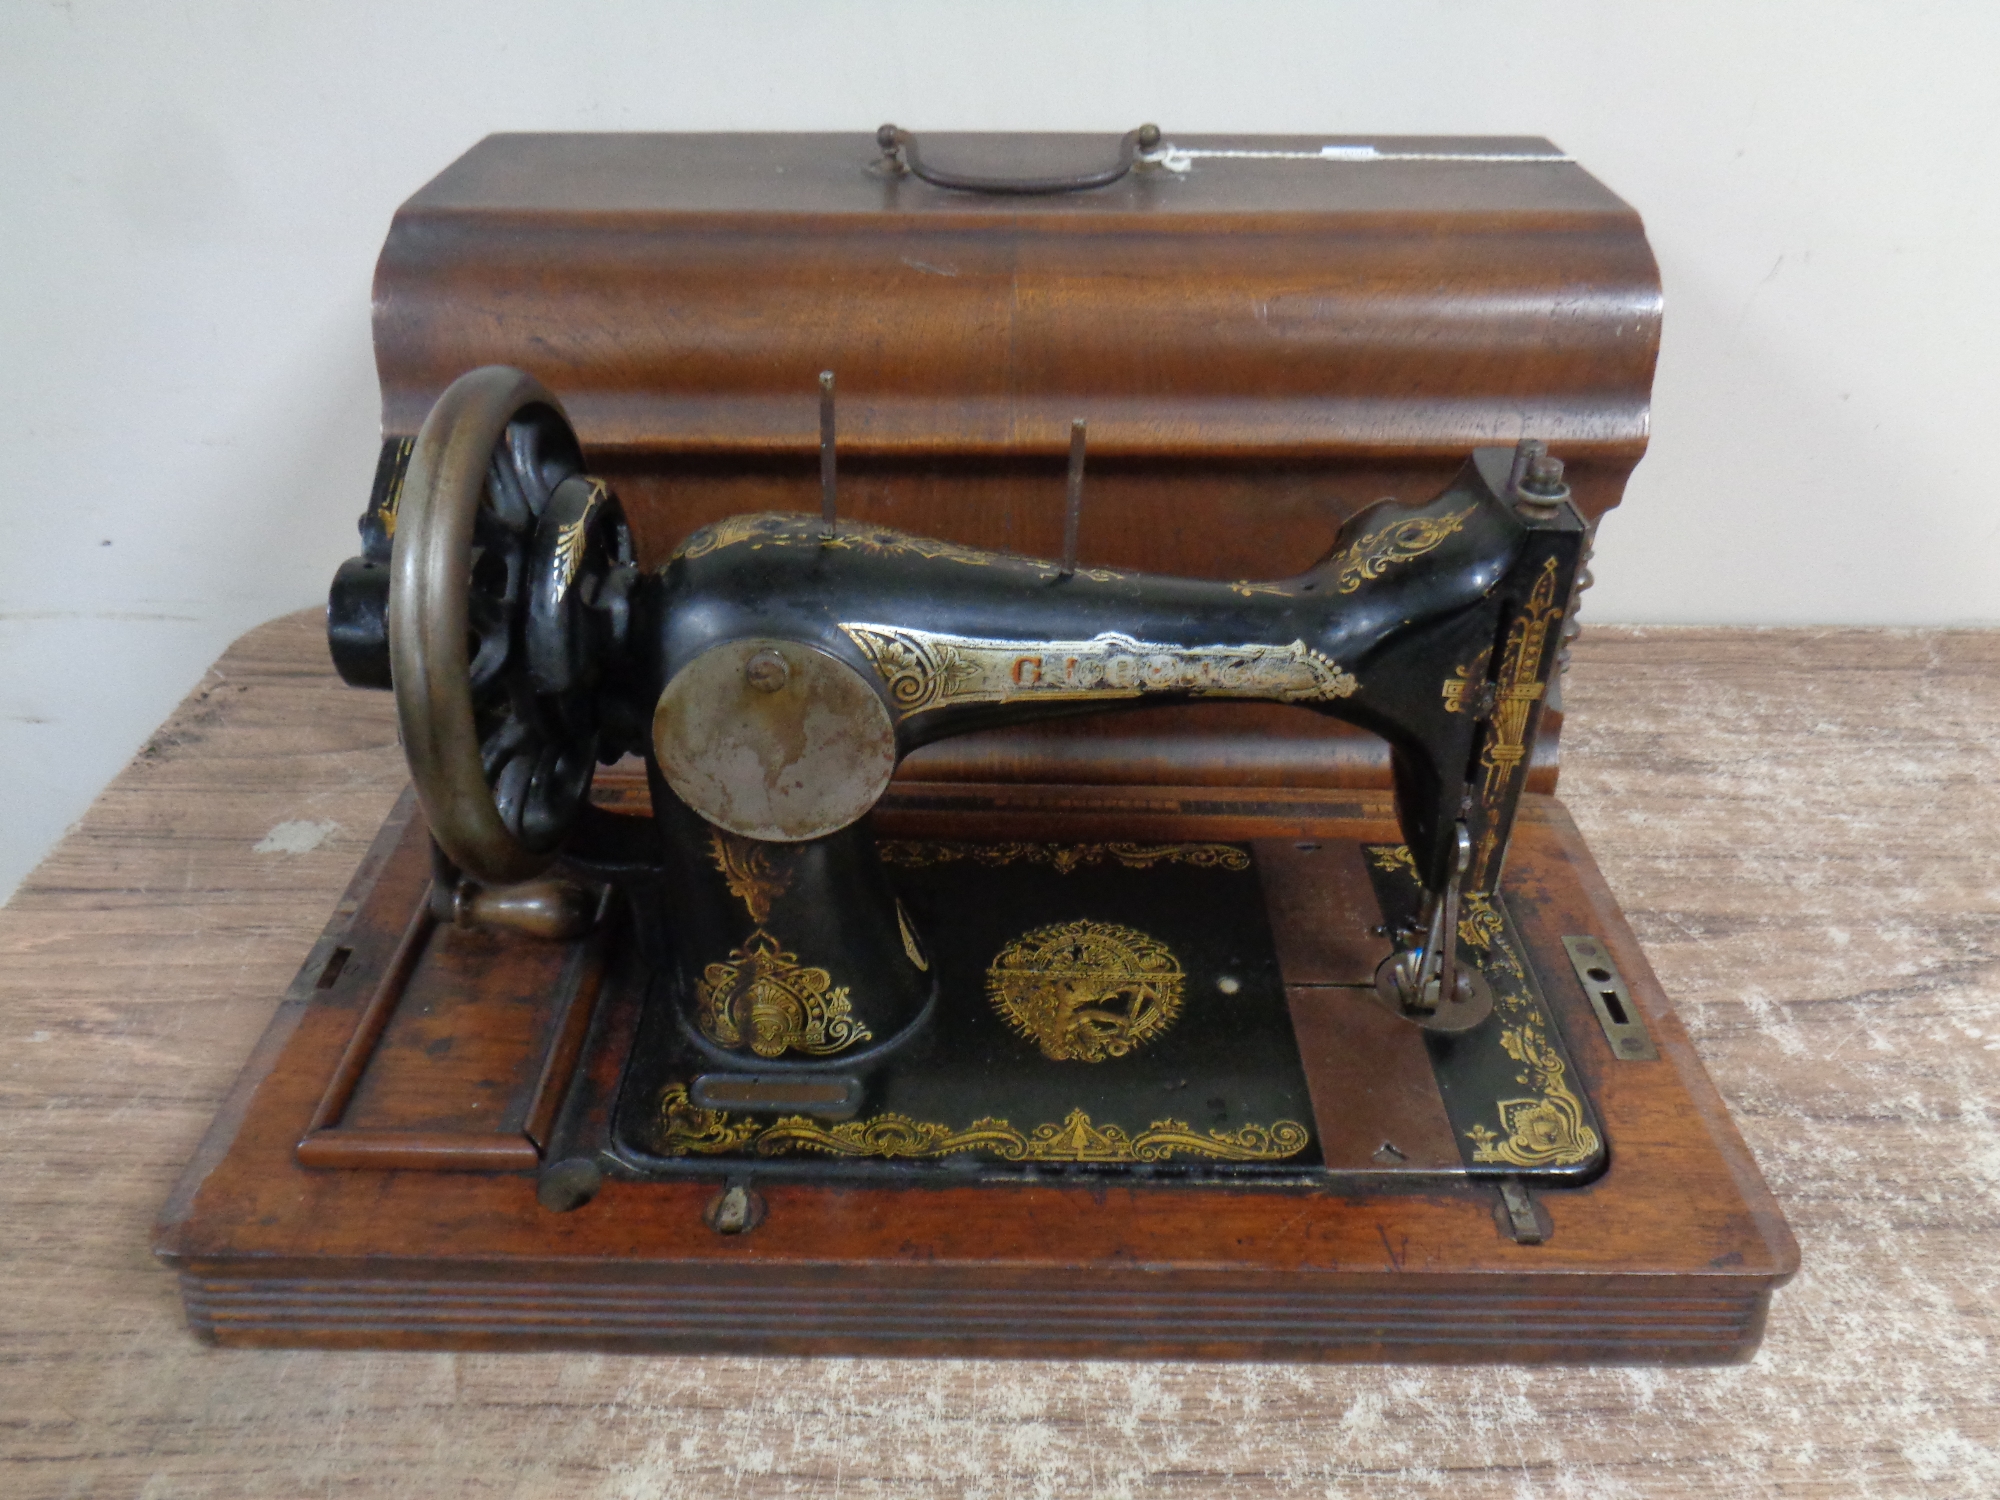 A vintage Gloria hand sewing machine in case